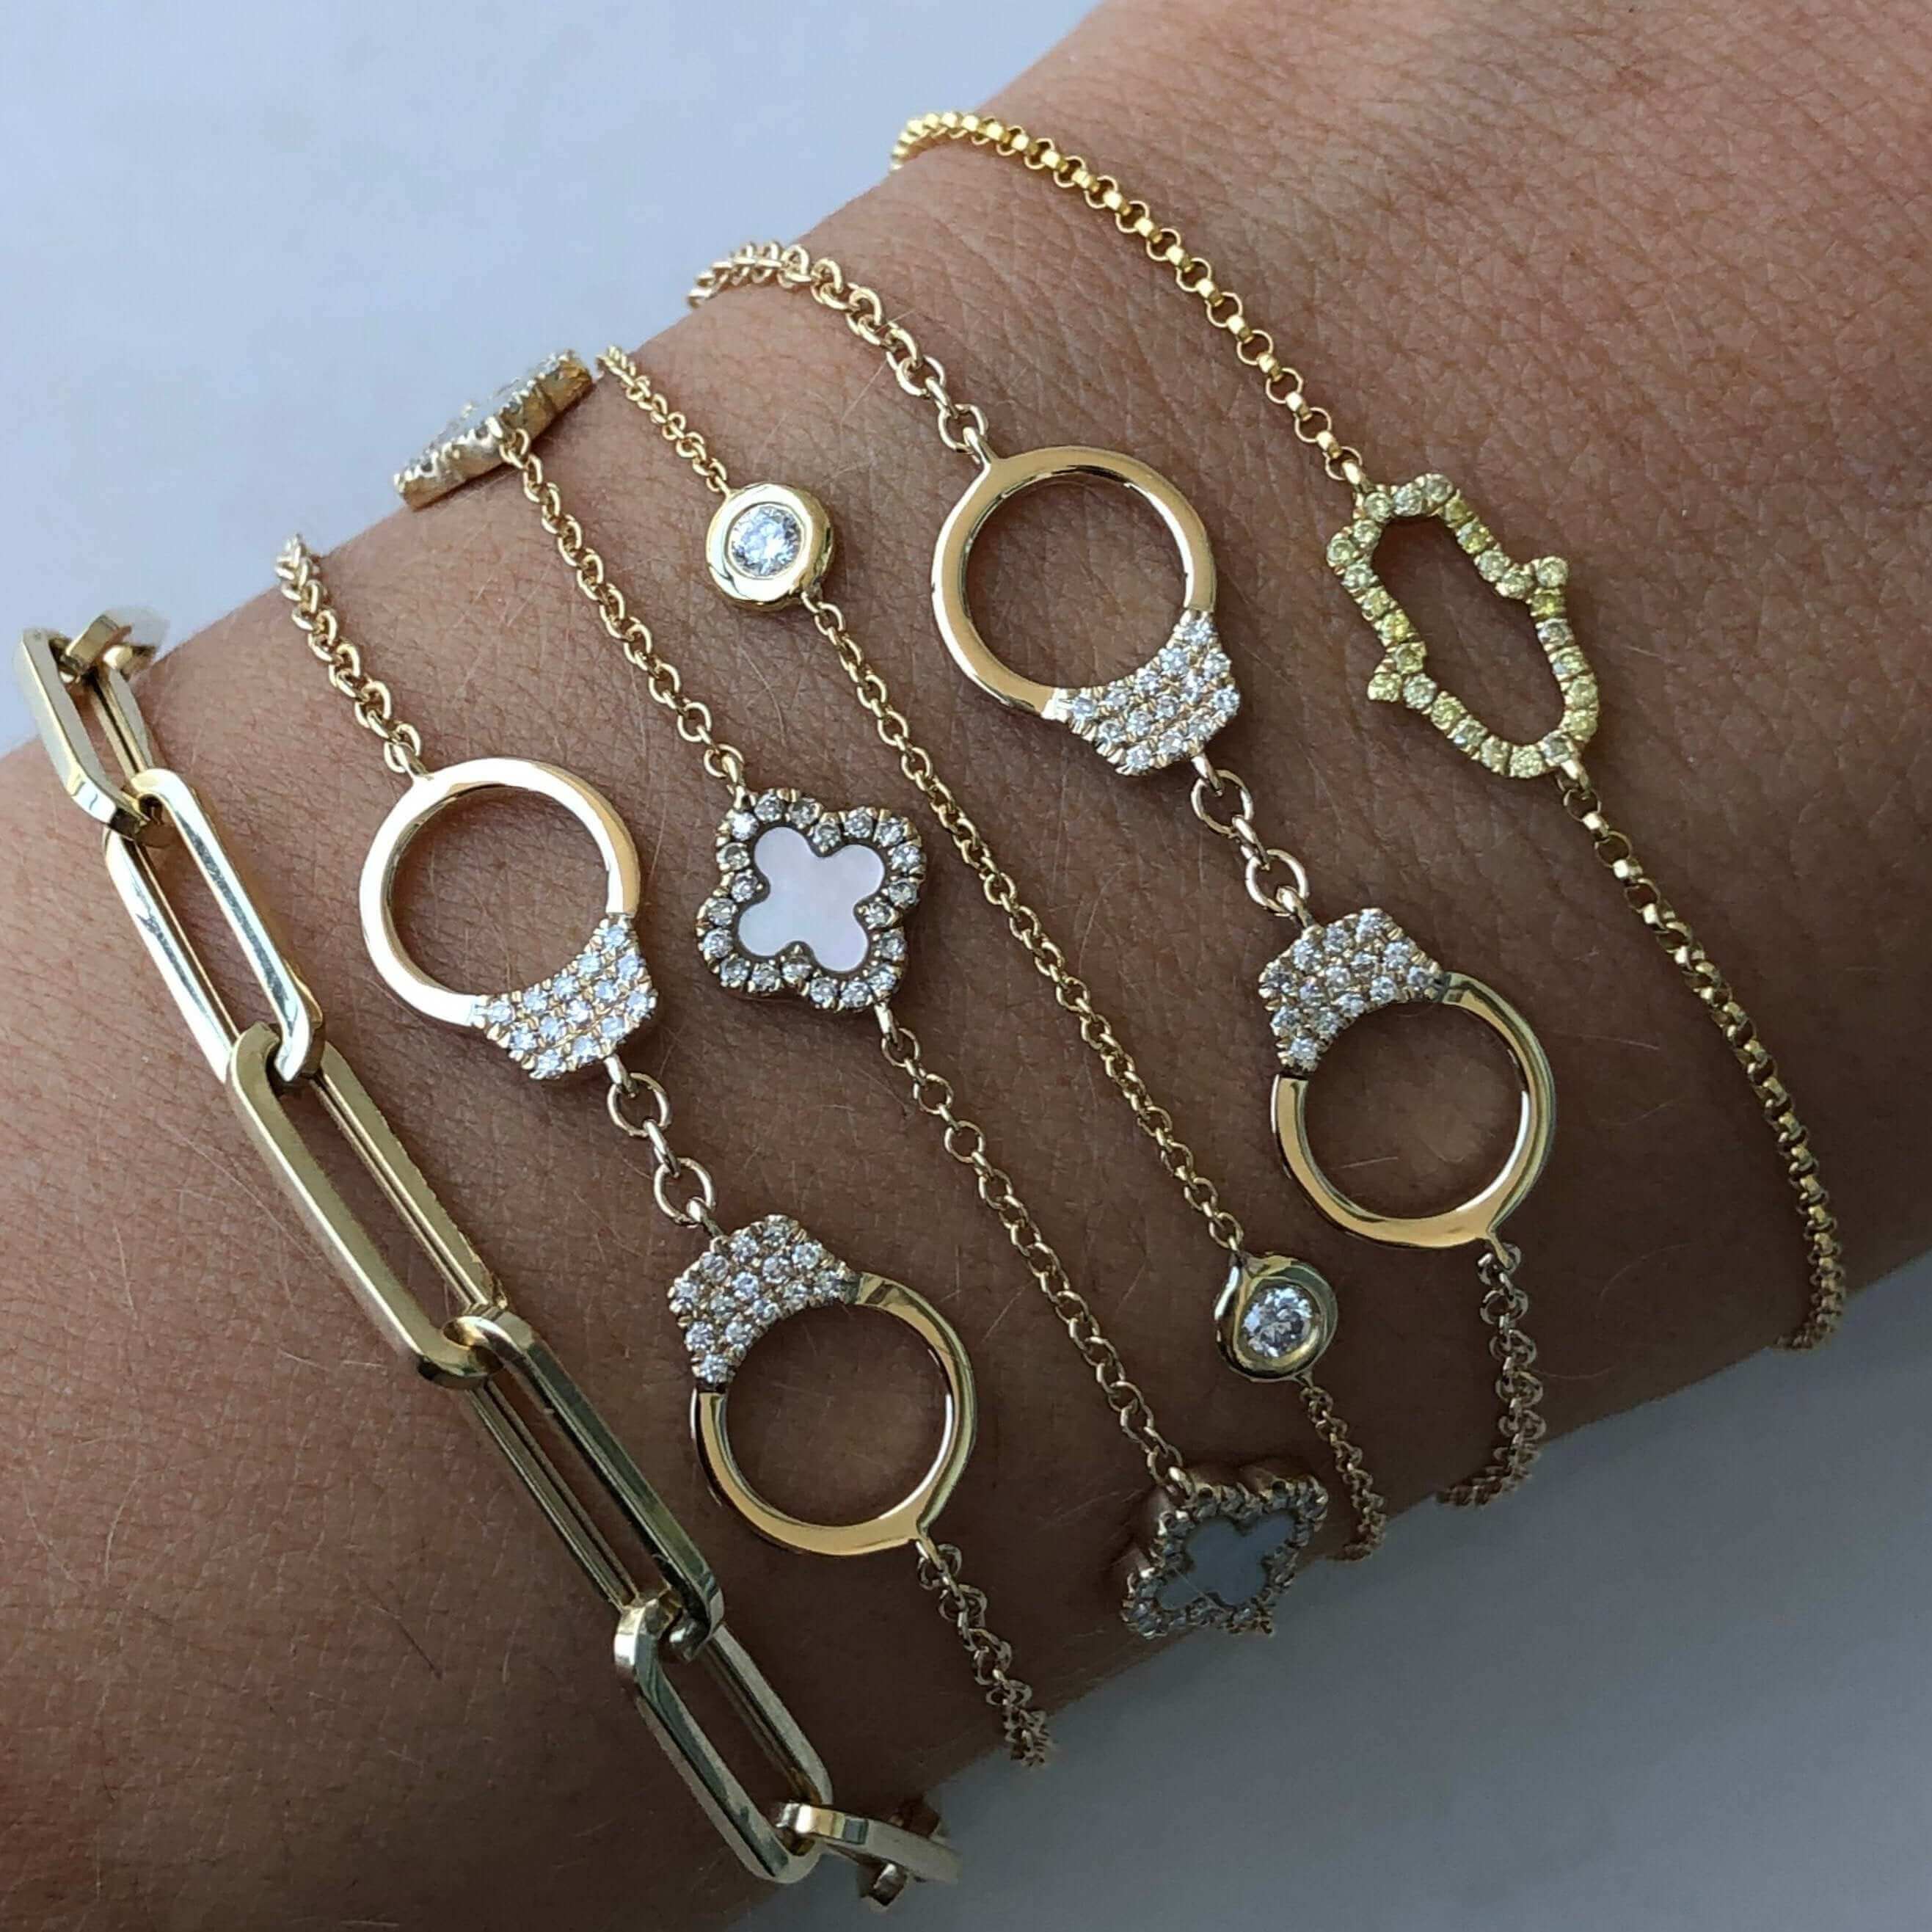 Diamond Cuff Bracelet To Inspire Jewellery Lovers - Only Natural Diamonds